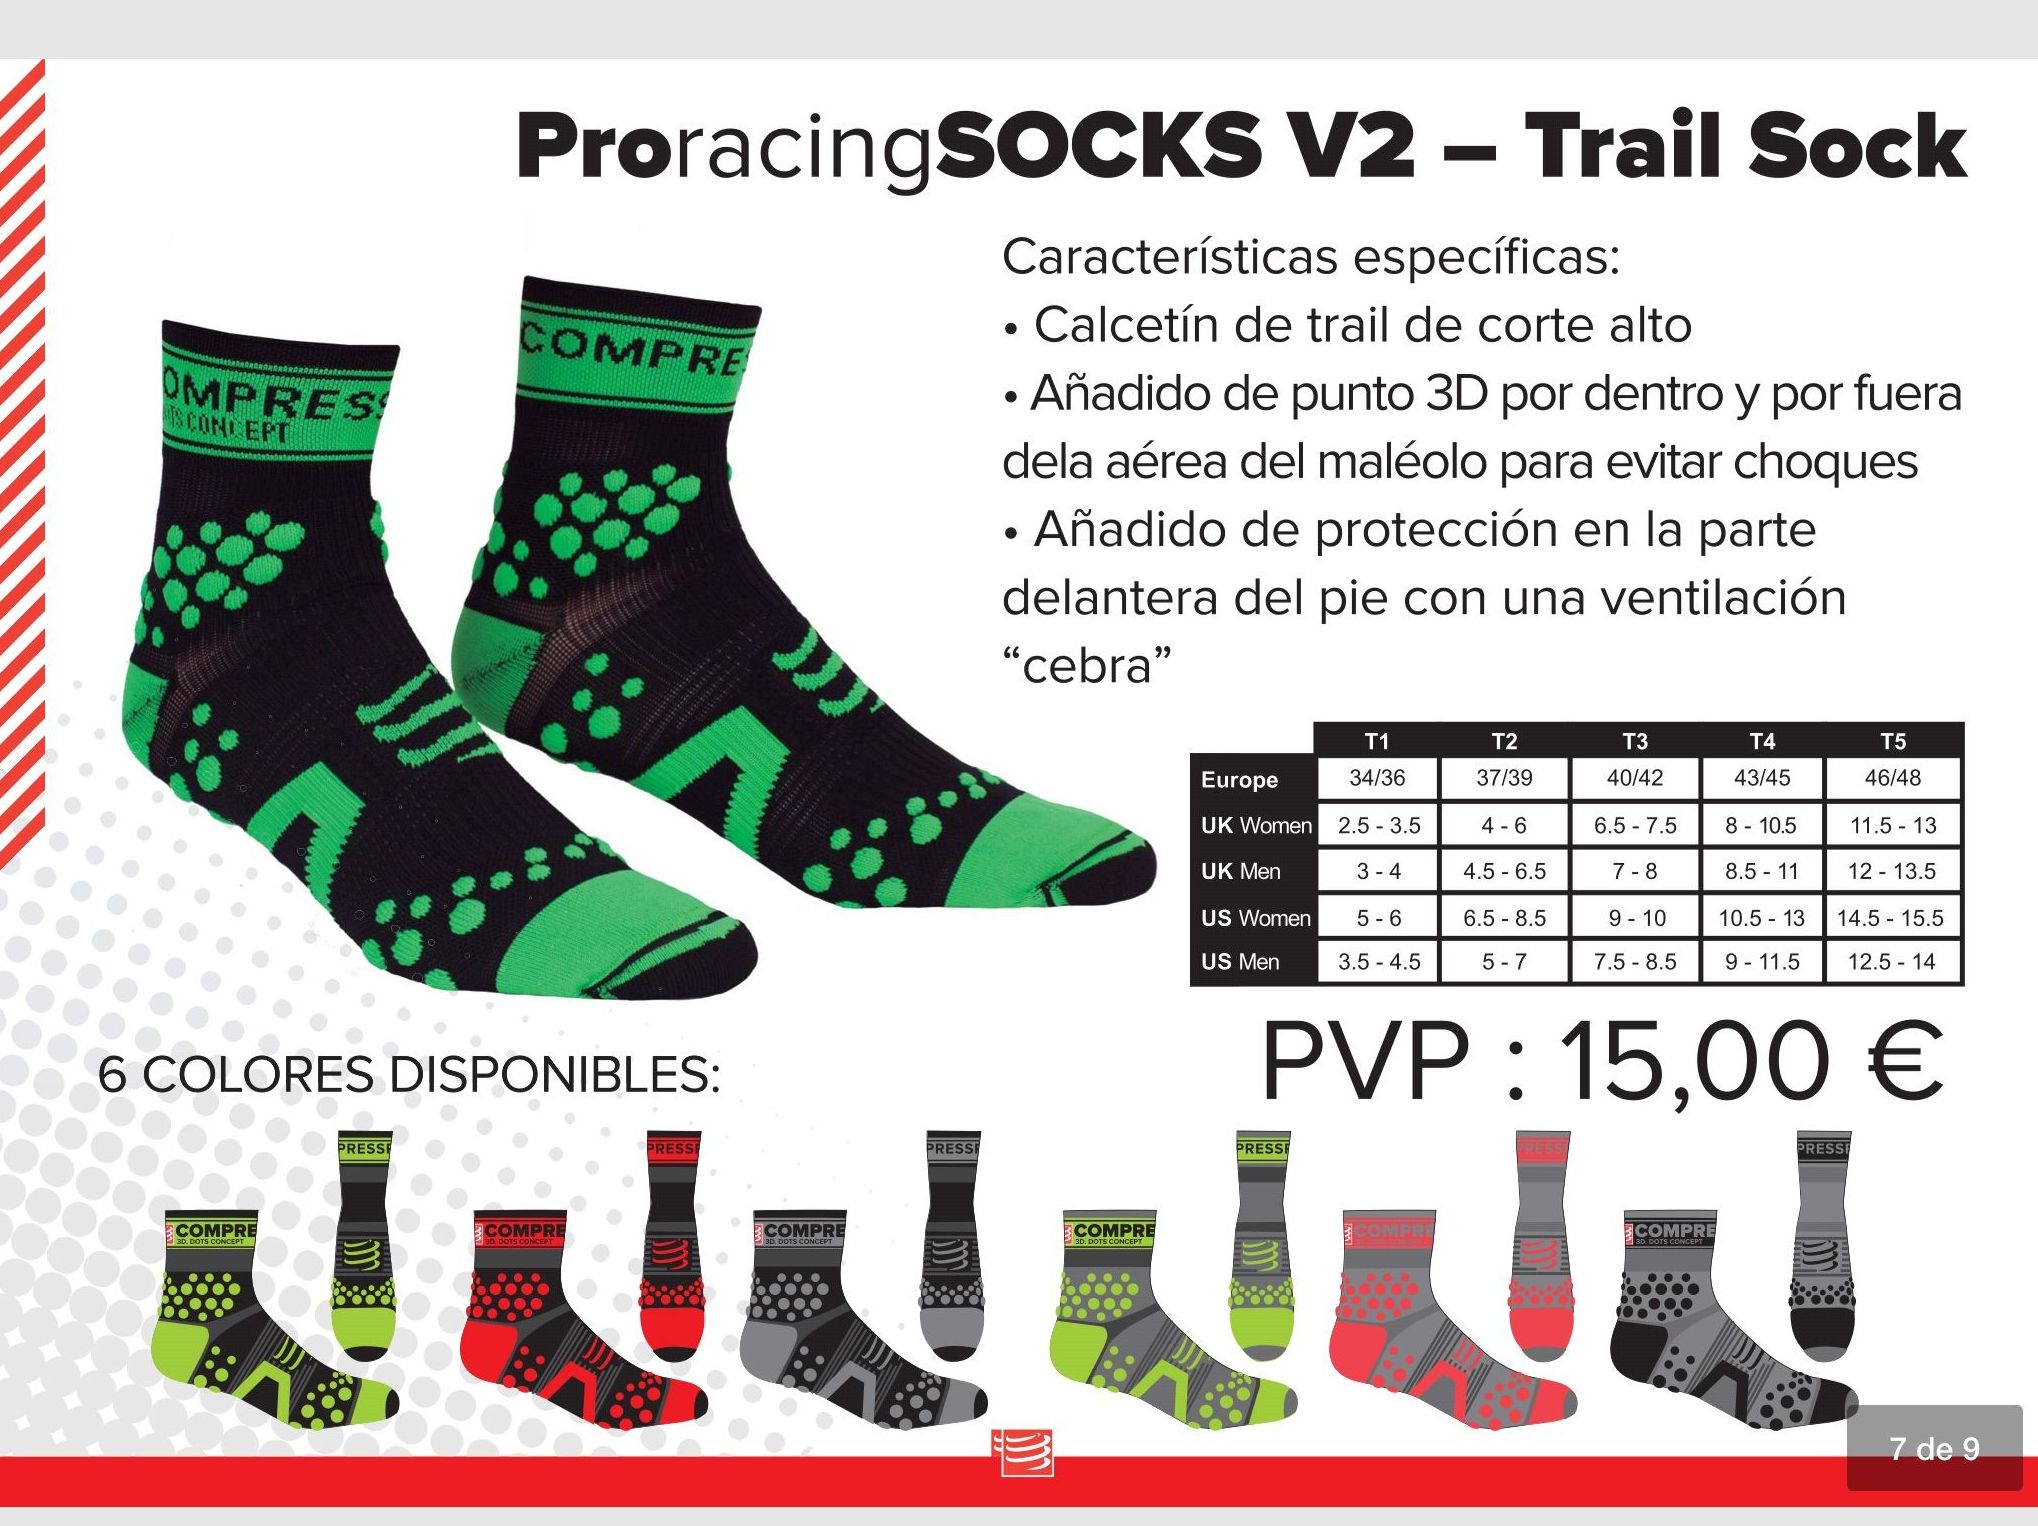 Calcetín técnico pro racing socks v2 - trail sock: TIENDA ONLINE de Ortopedia La Fama }}